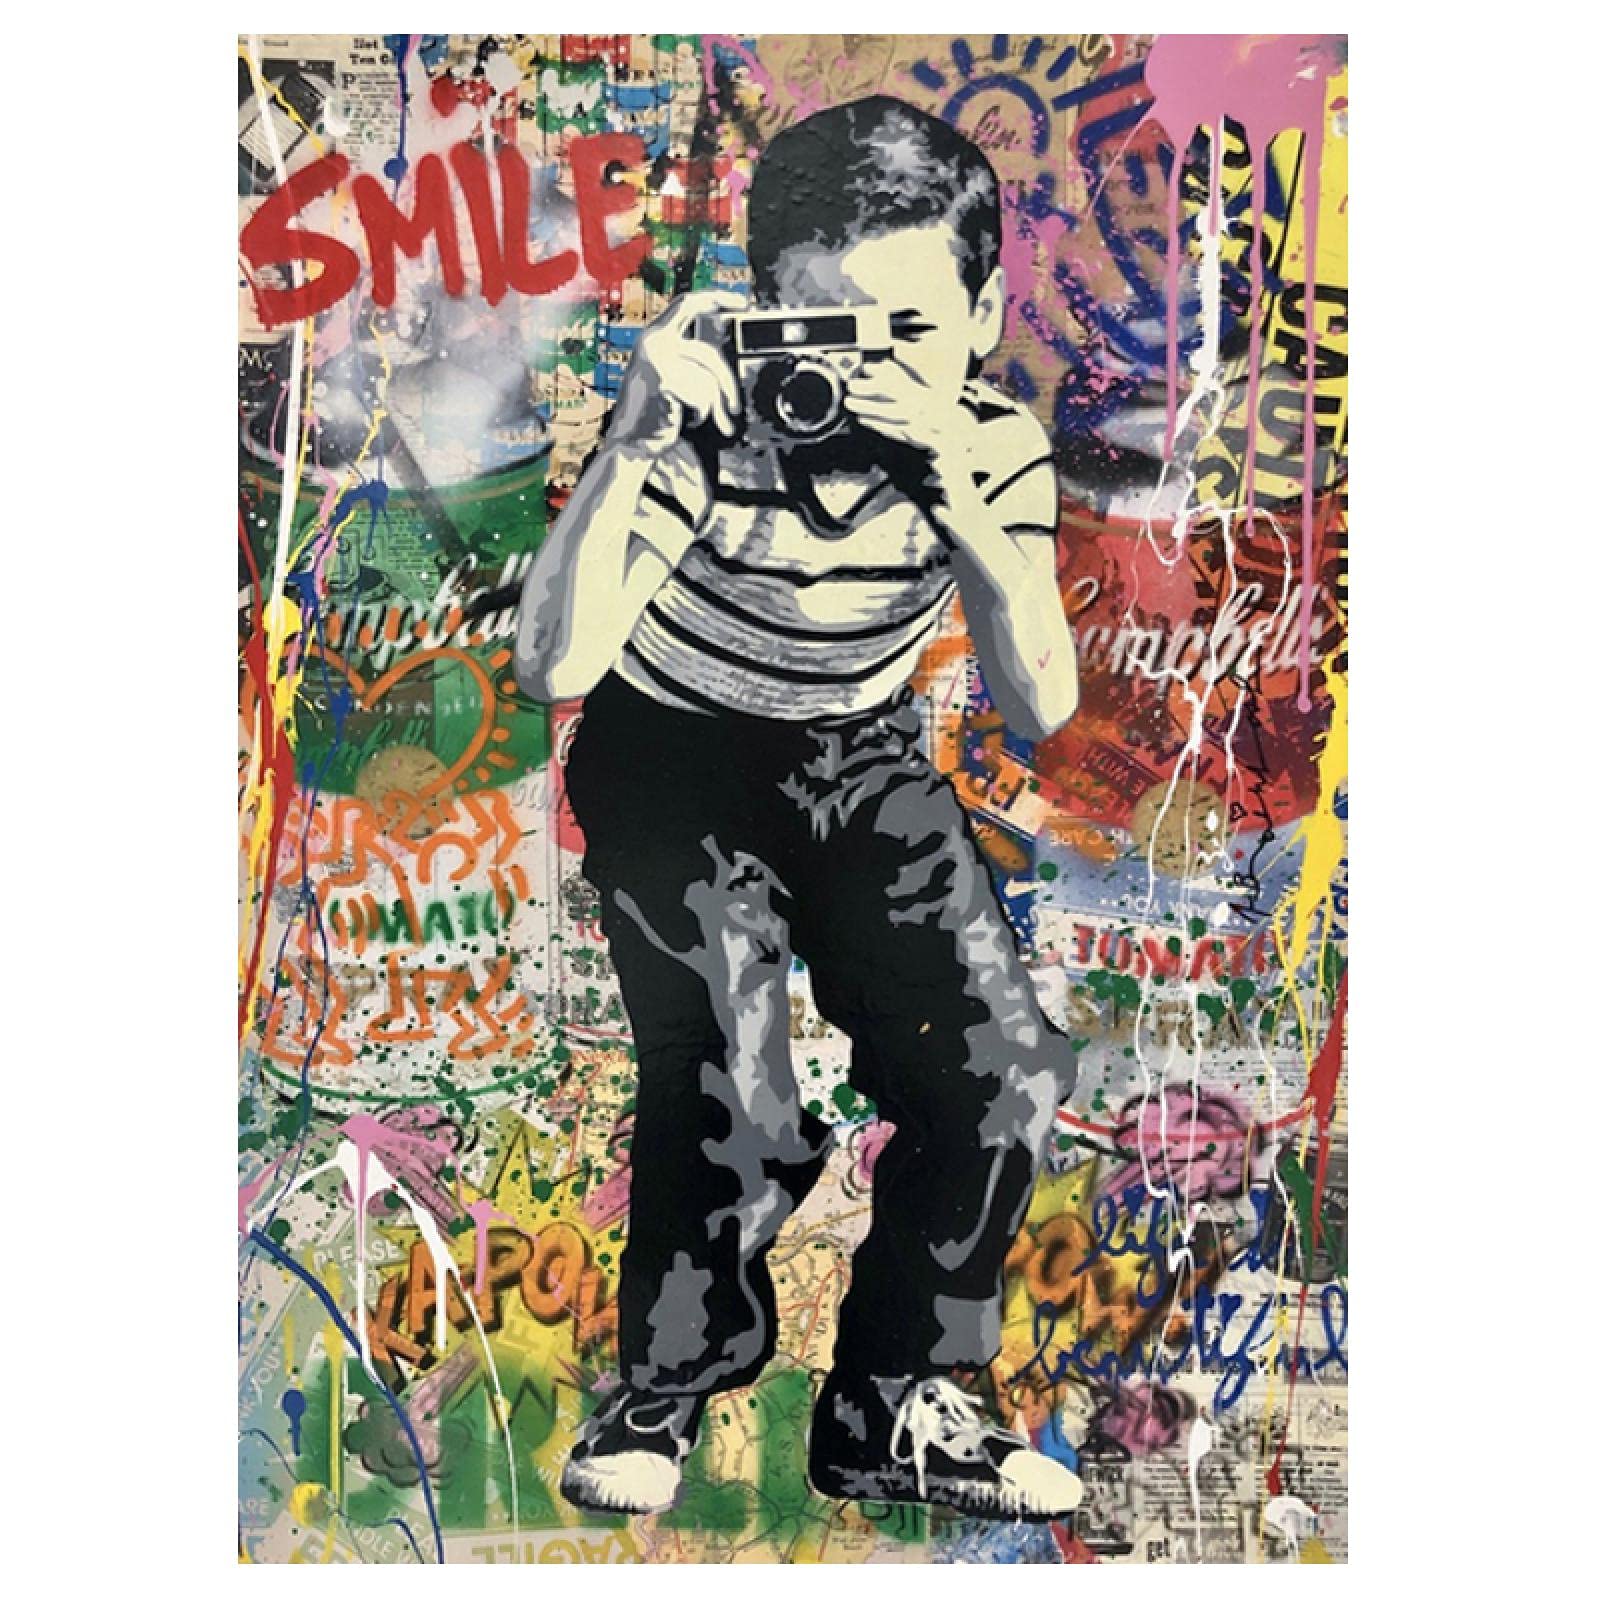 Poster Bilder Bunte Banksy Art Graffiti Fotografieren Junge Leinwand Malerei Wandkunst Poster Drucke Wandbilder Wohnzimmer Wandbild 70x100cm/27,6"x39.4" Rahmenlos